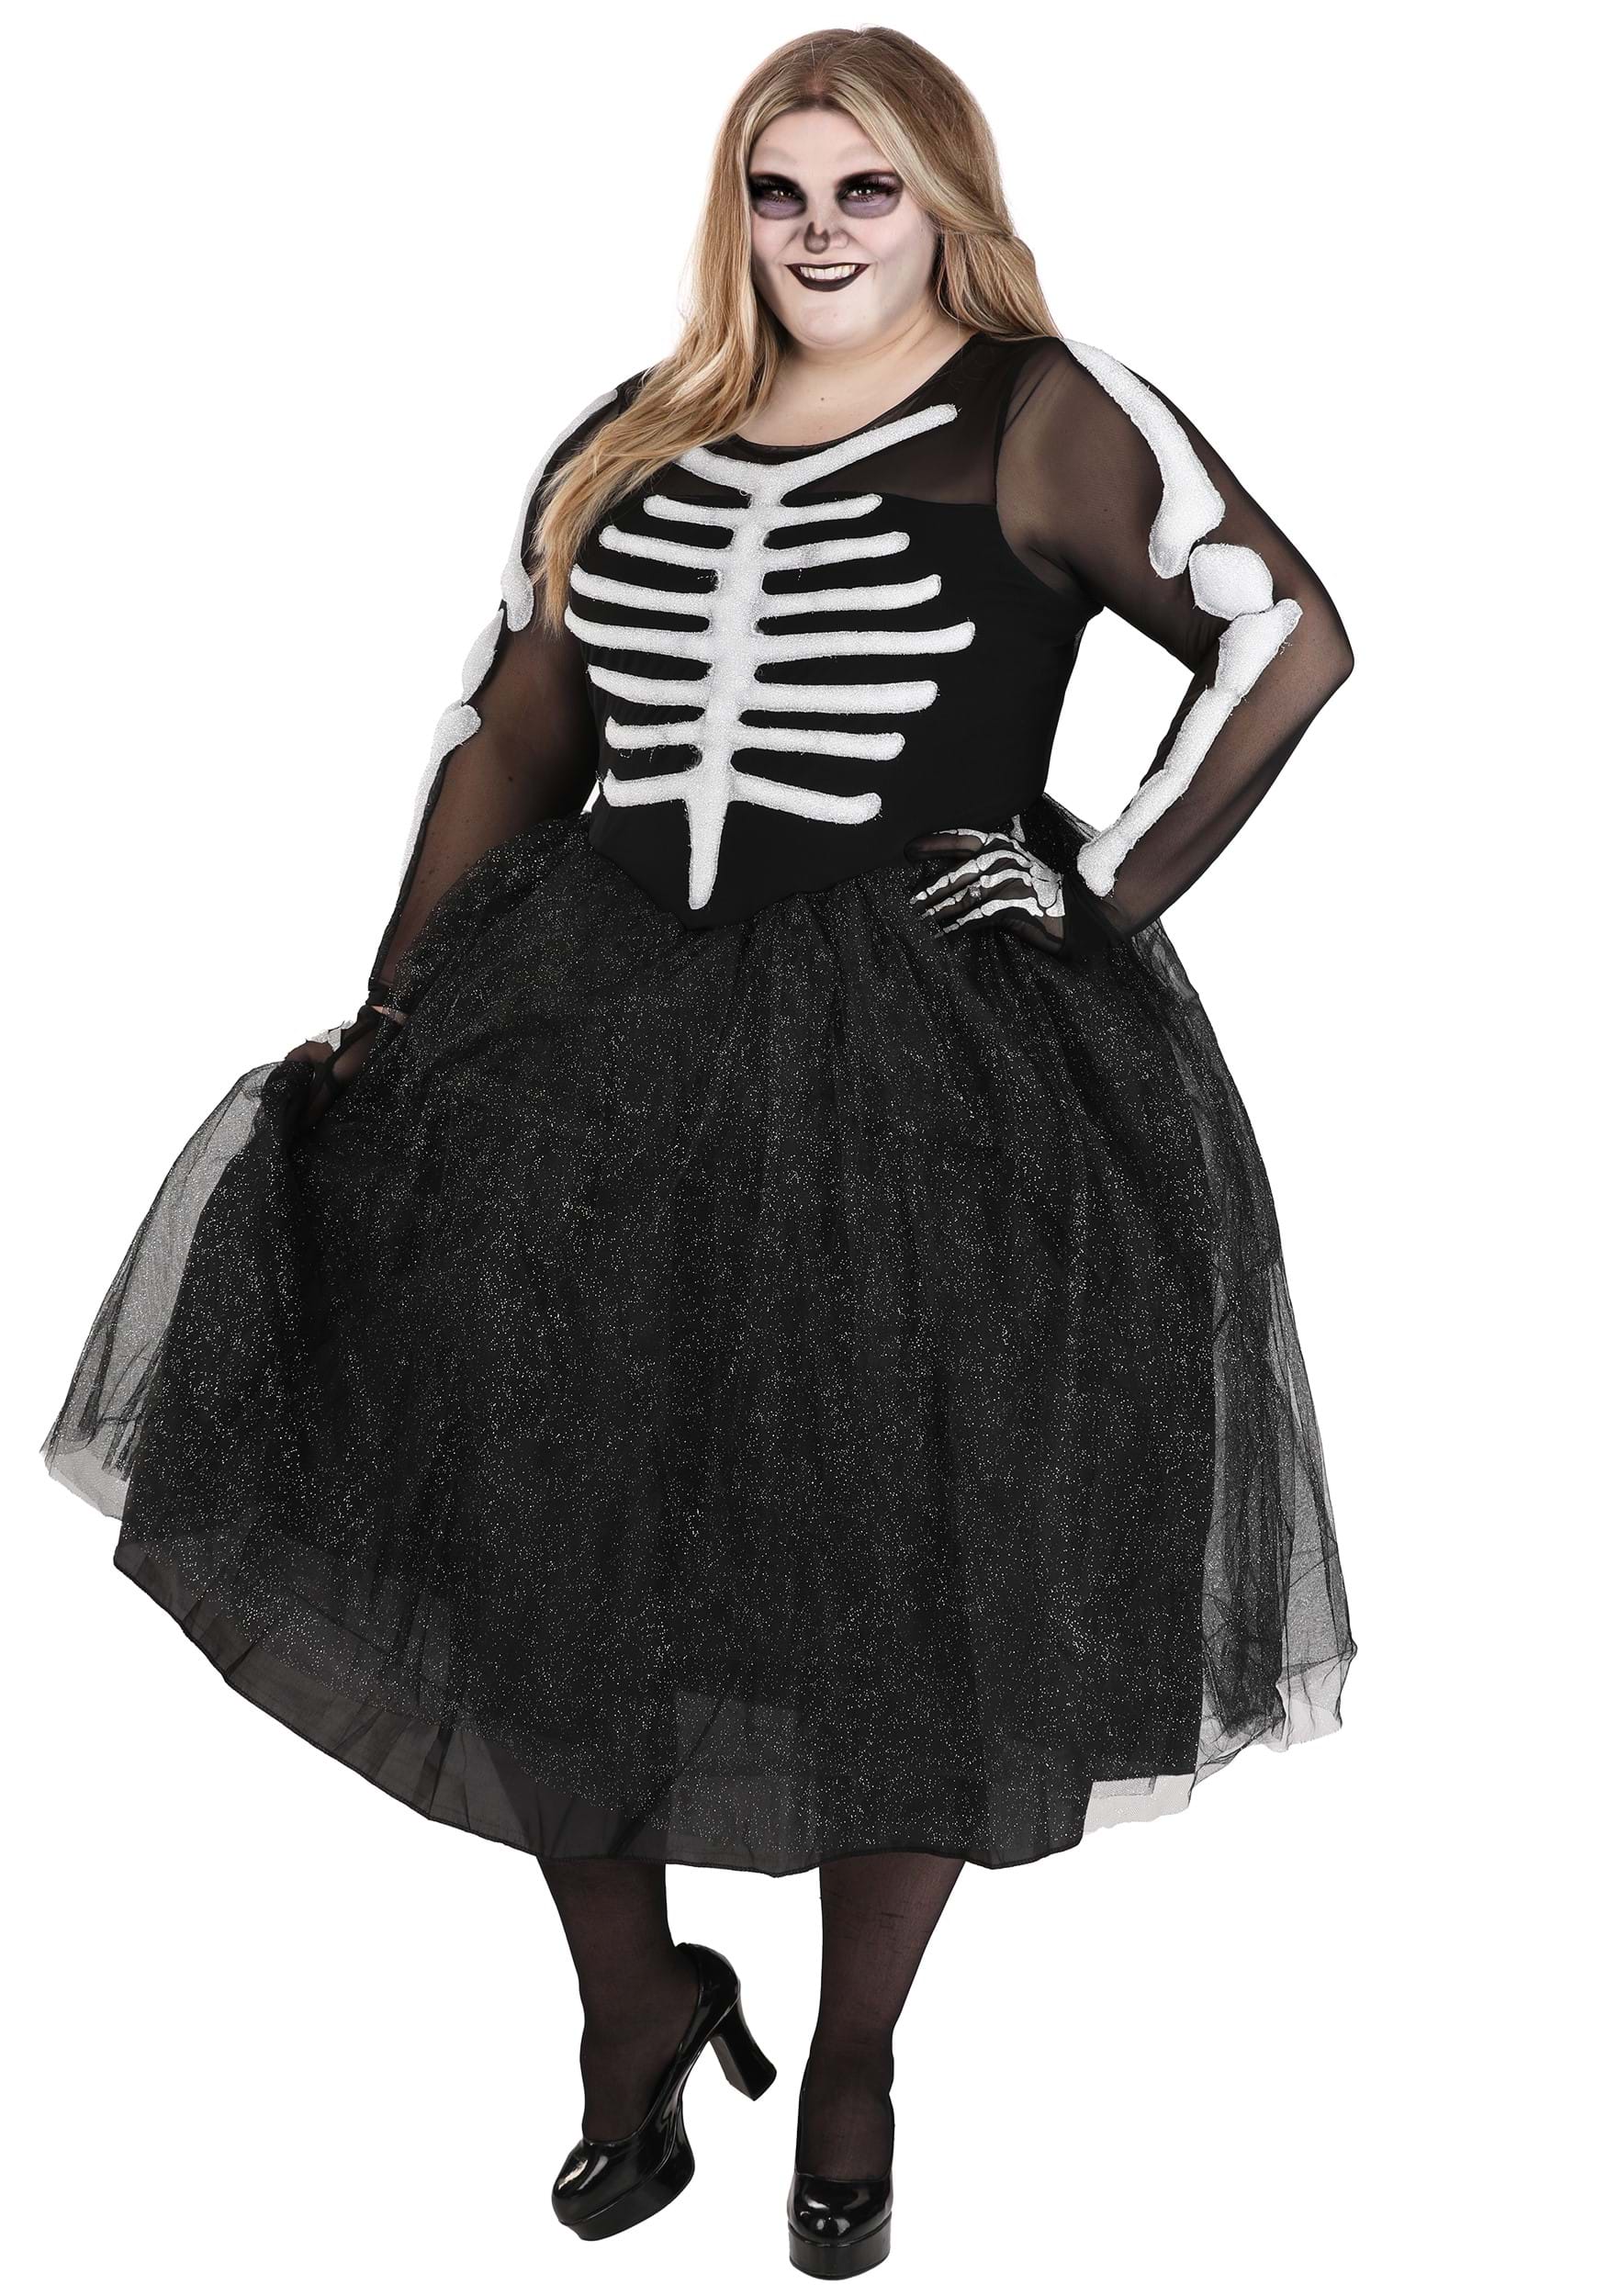 Image of Women's Skeleton Beauty Plus Size Costume ID FUN2691PL-6X